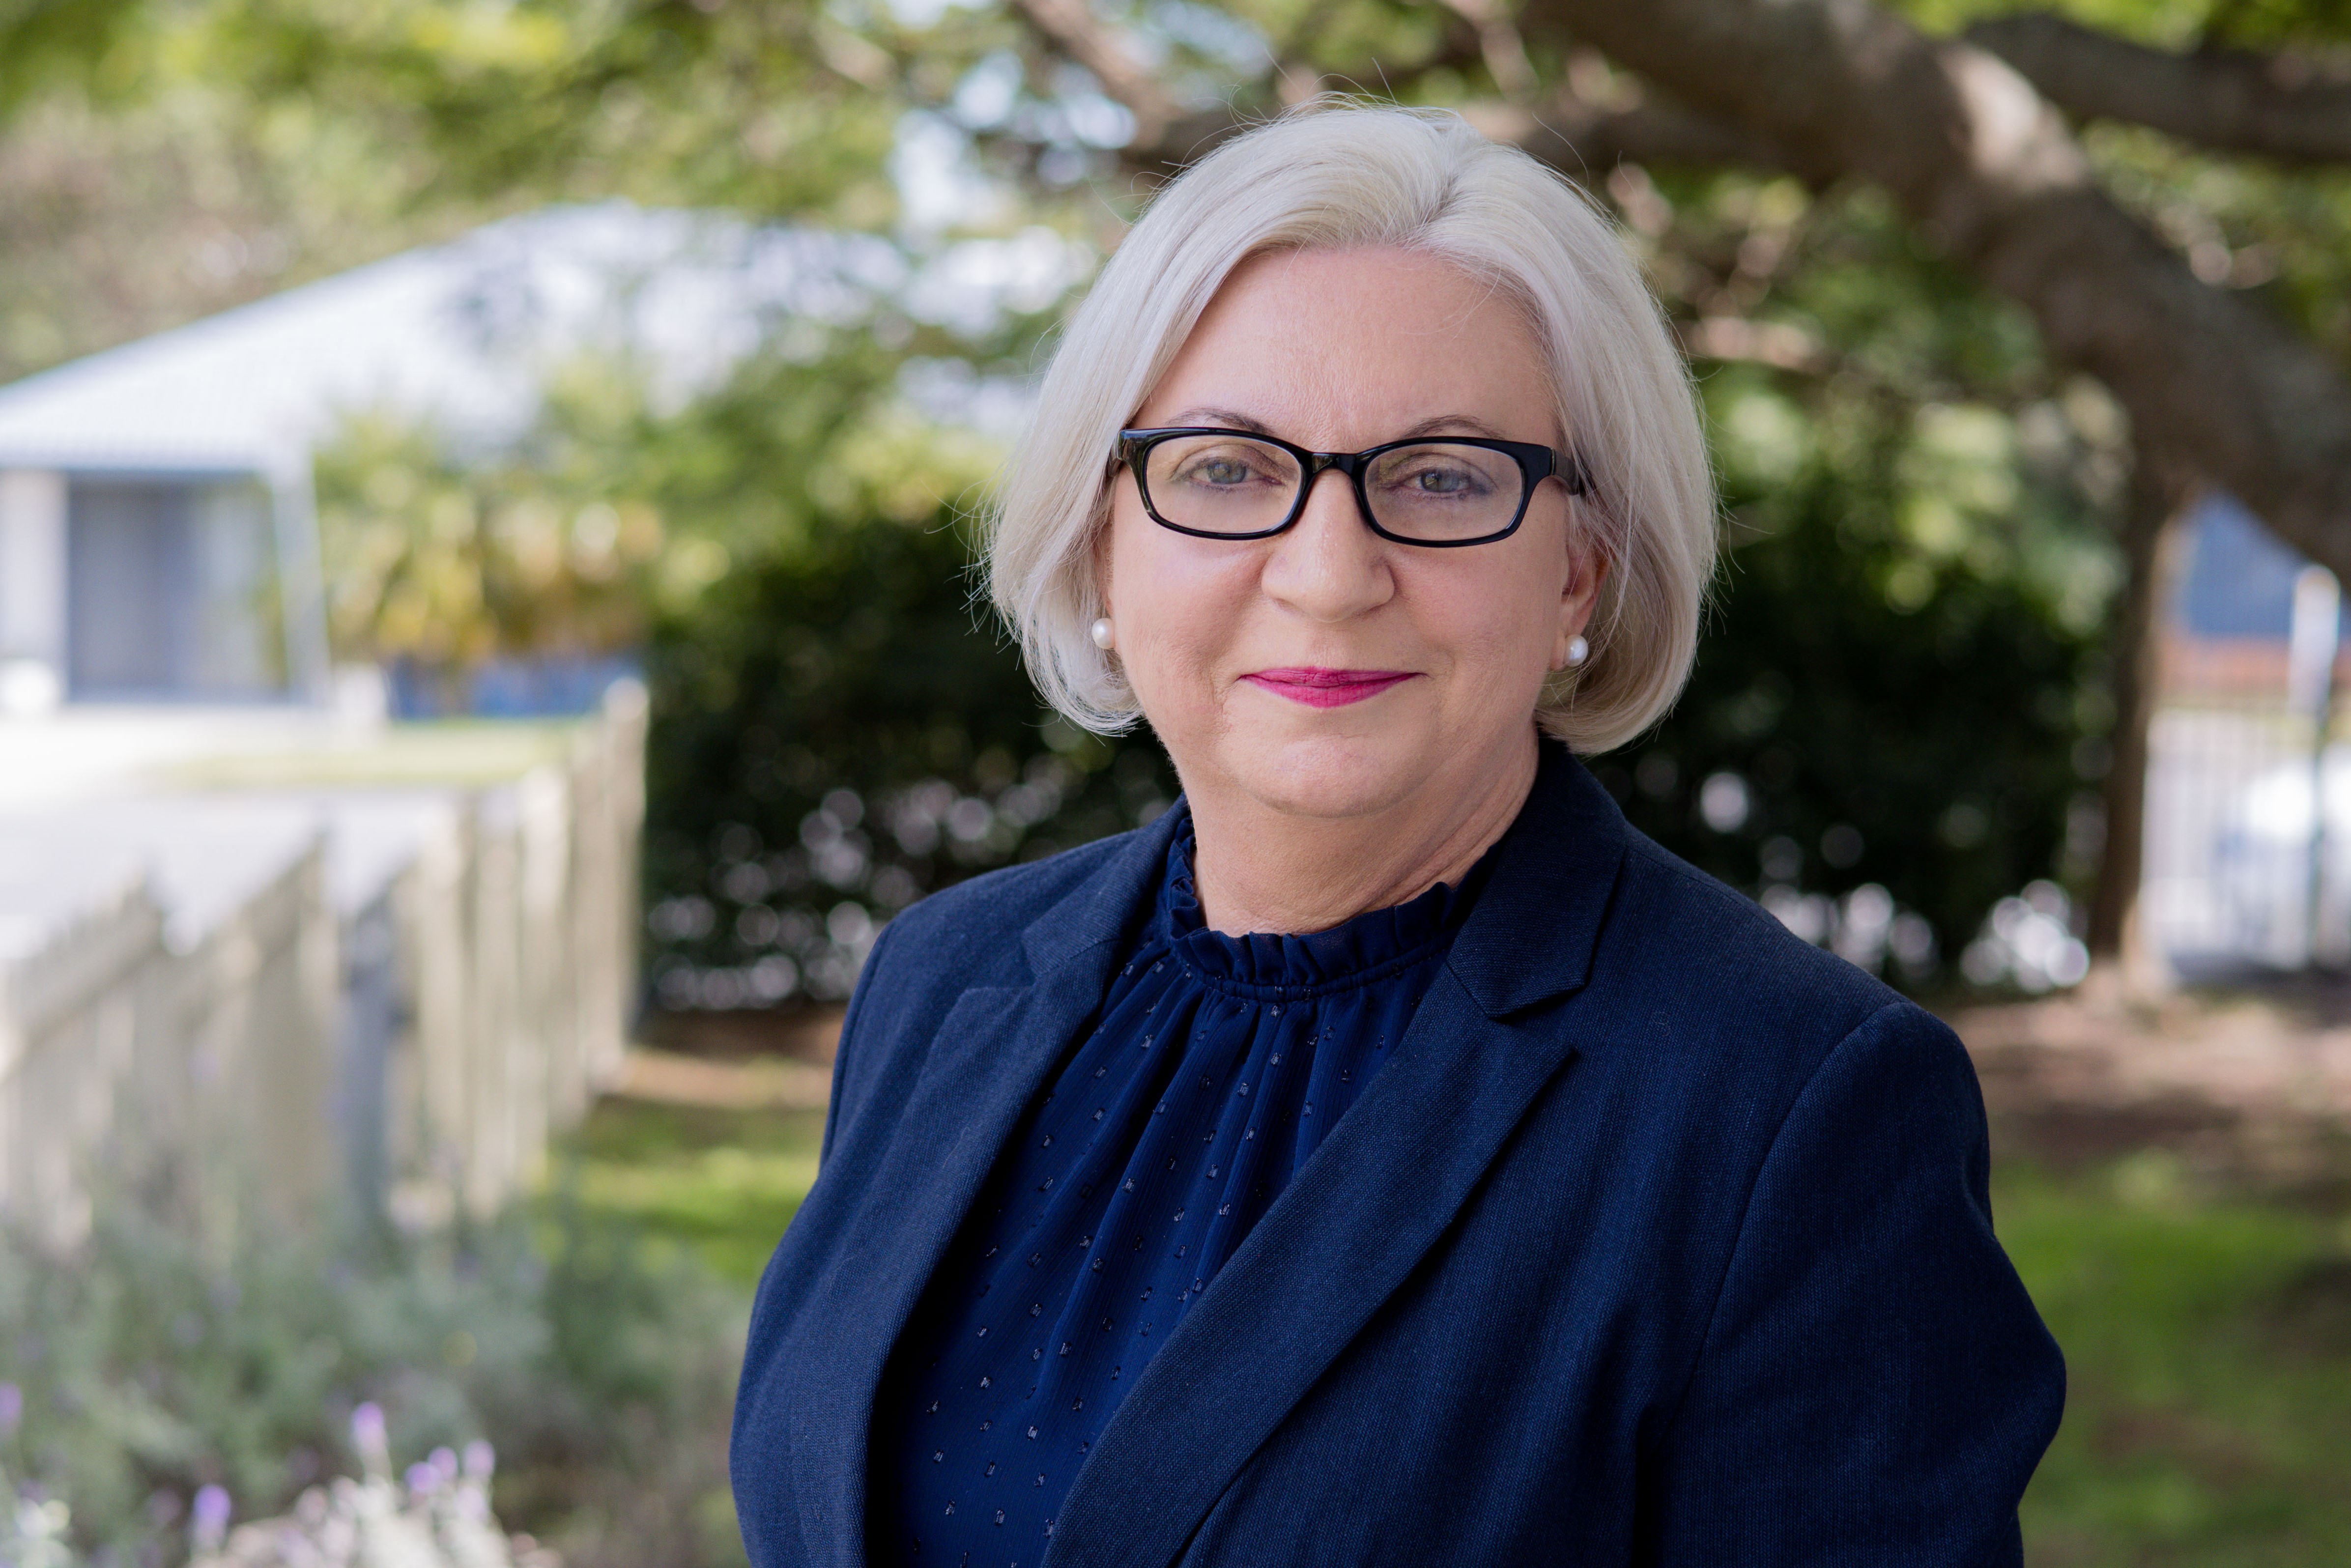 Image of Cheryl Gray, CEO of Women’s Network Australia